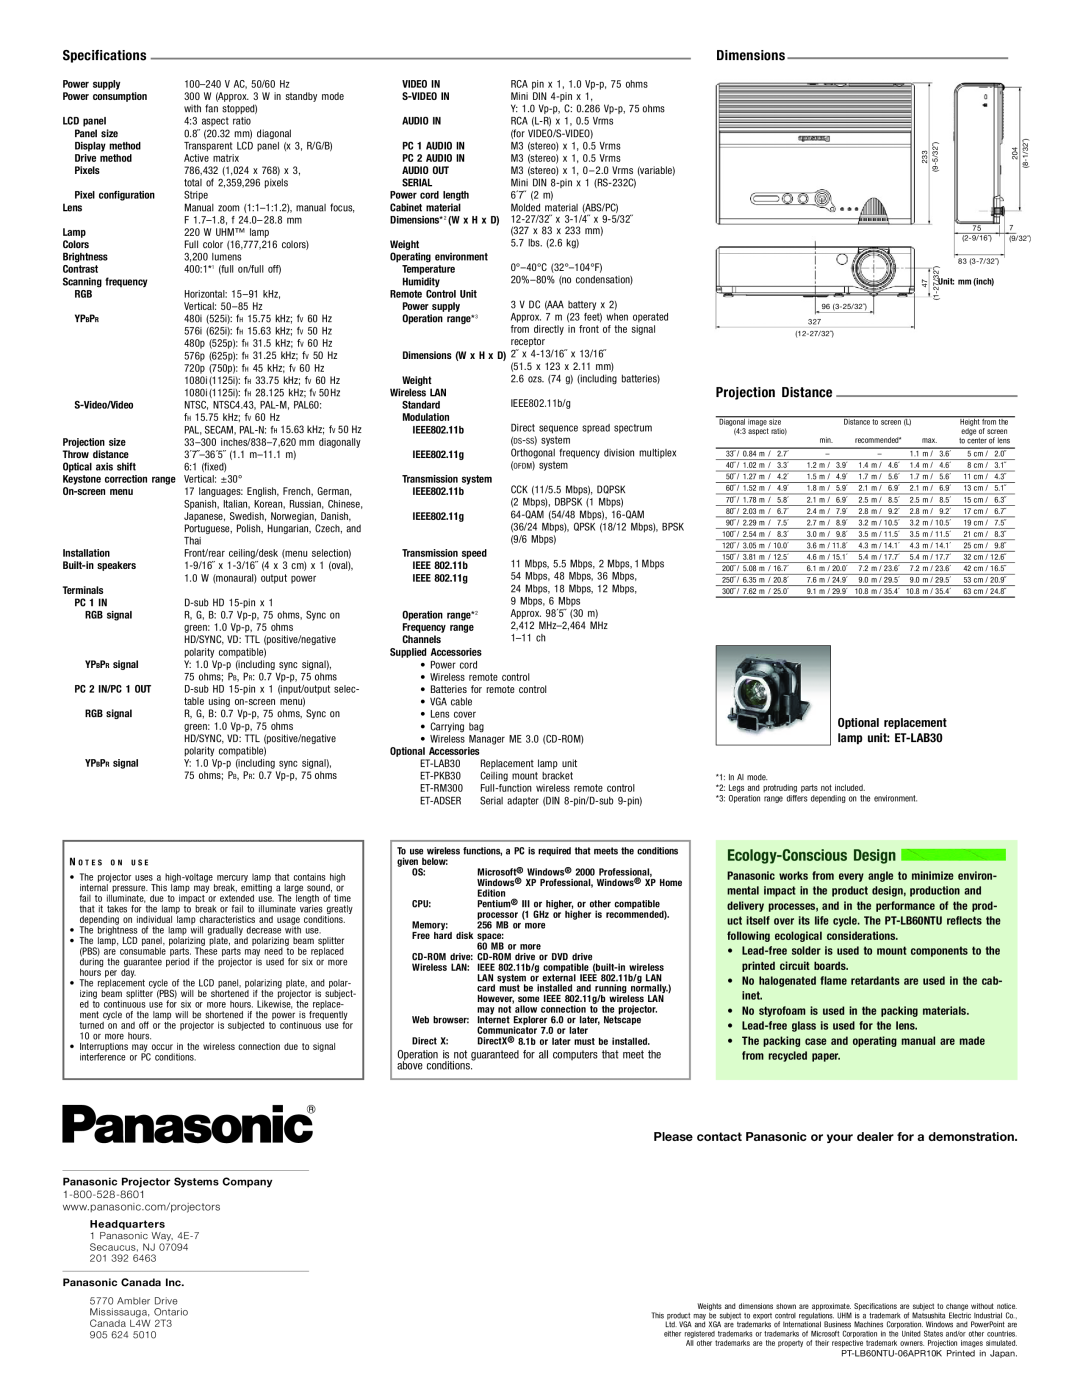 Panasonic XGA3200, PT-LB60NTU manual Specifications, Dimensions, Ecology-Conscious Design 